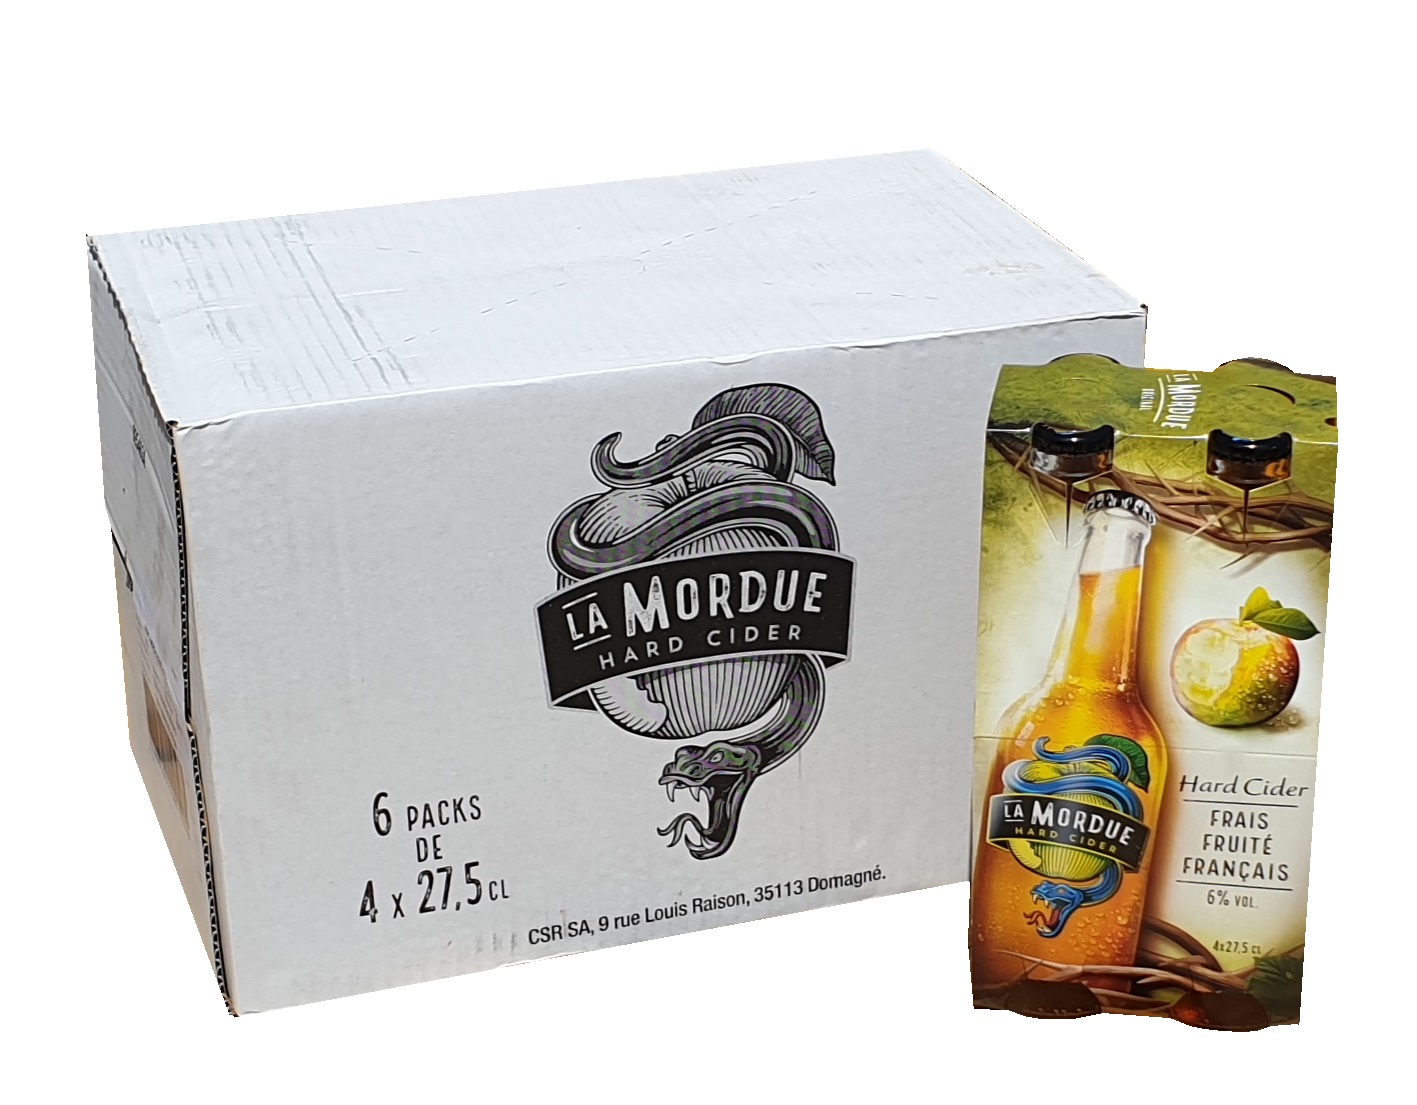 Hard Cider Mordue Original 6x4x27.5cl à 6°